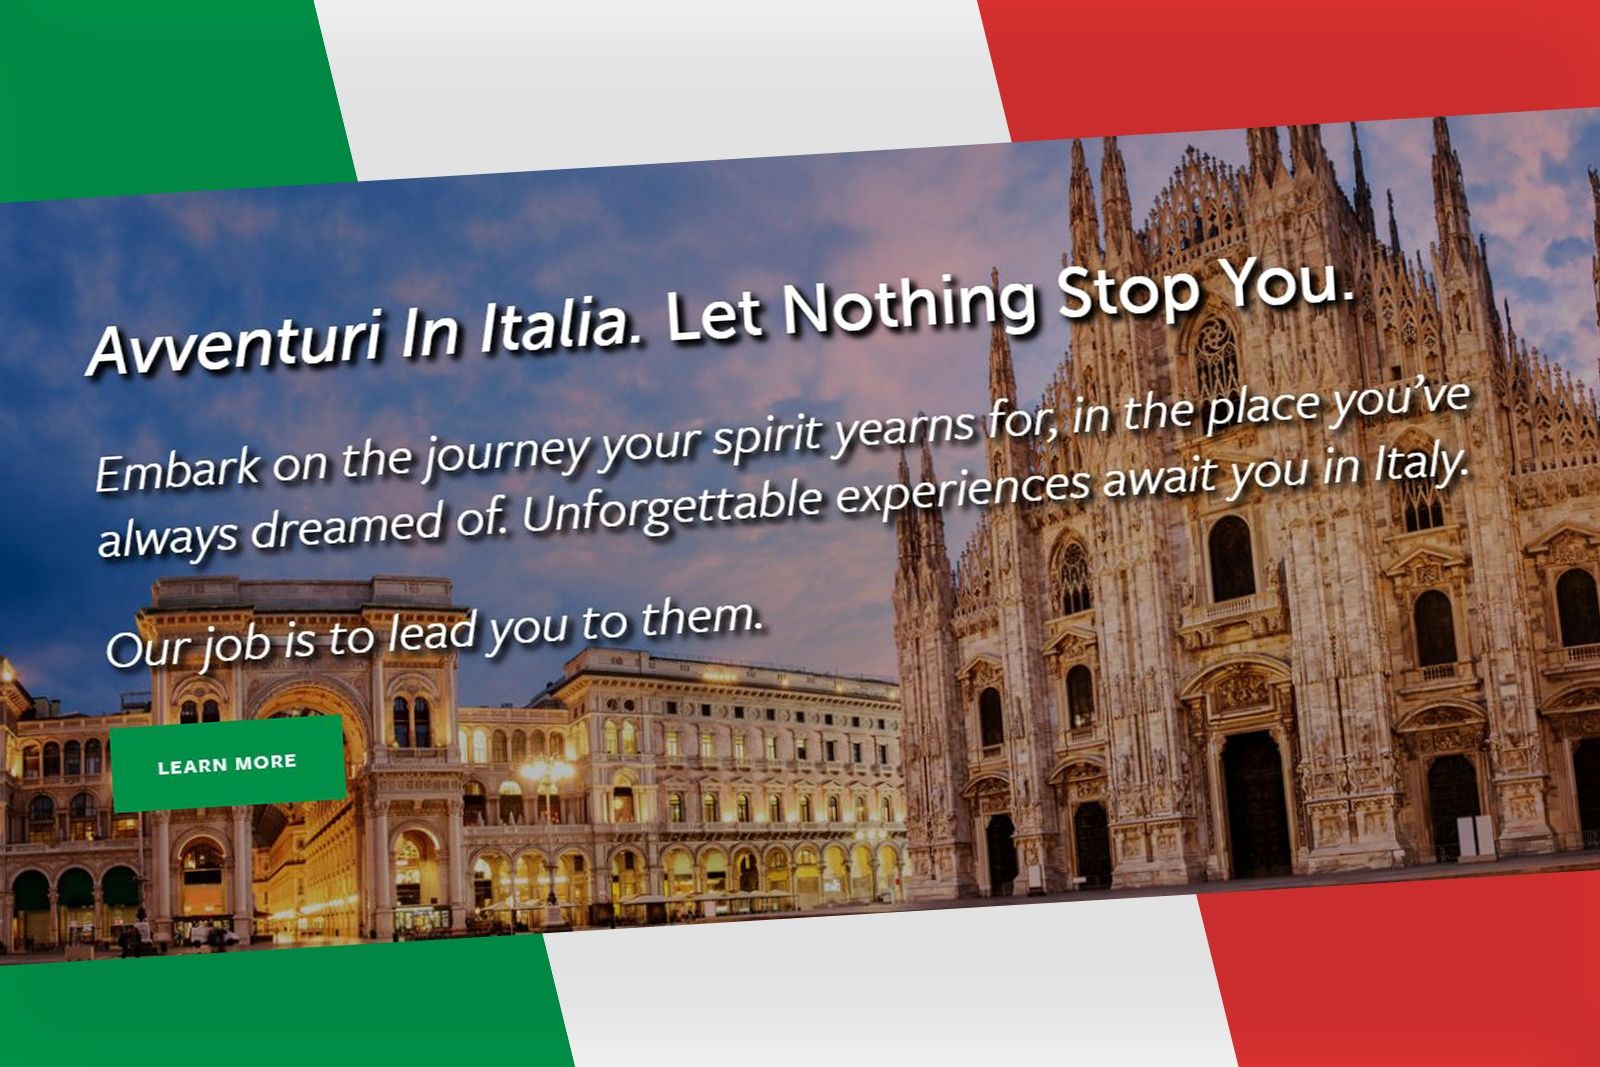 The Italian Tour Web Copy